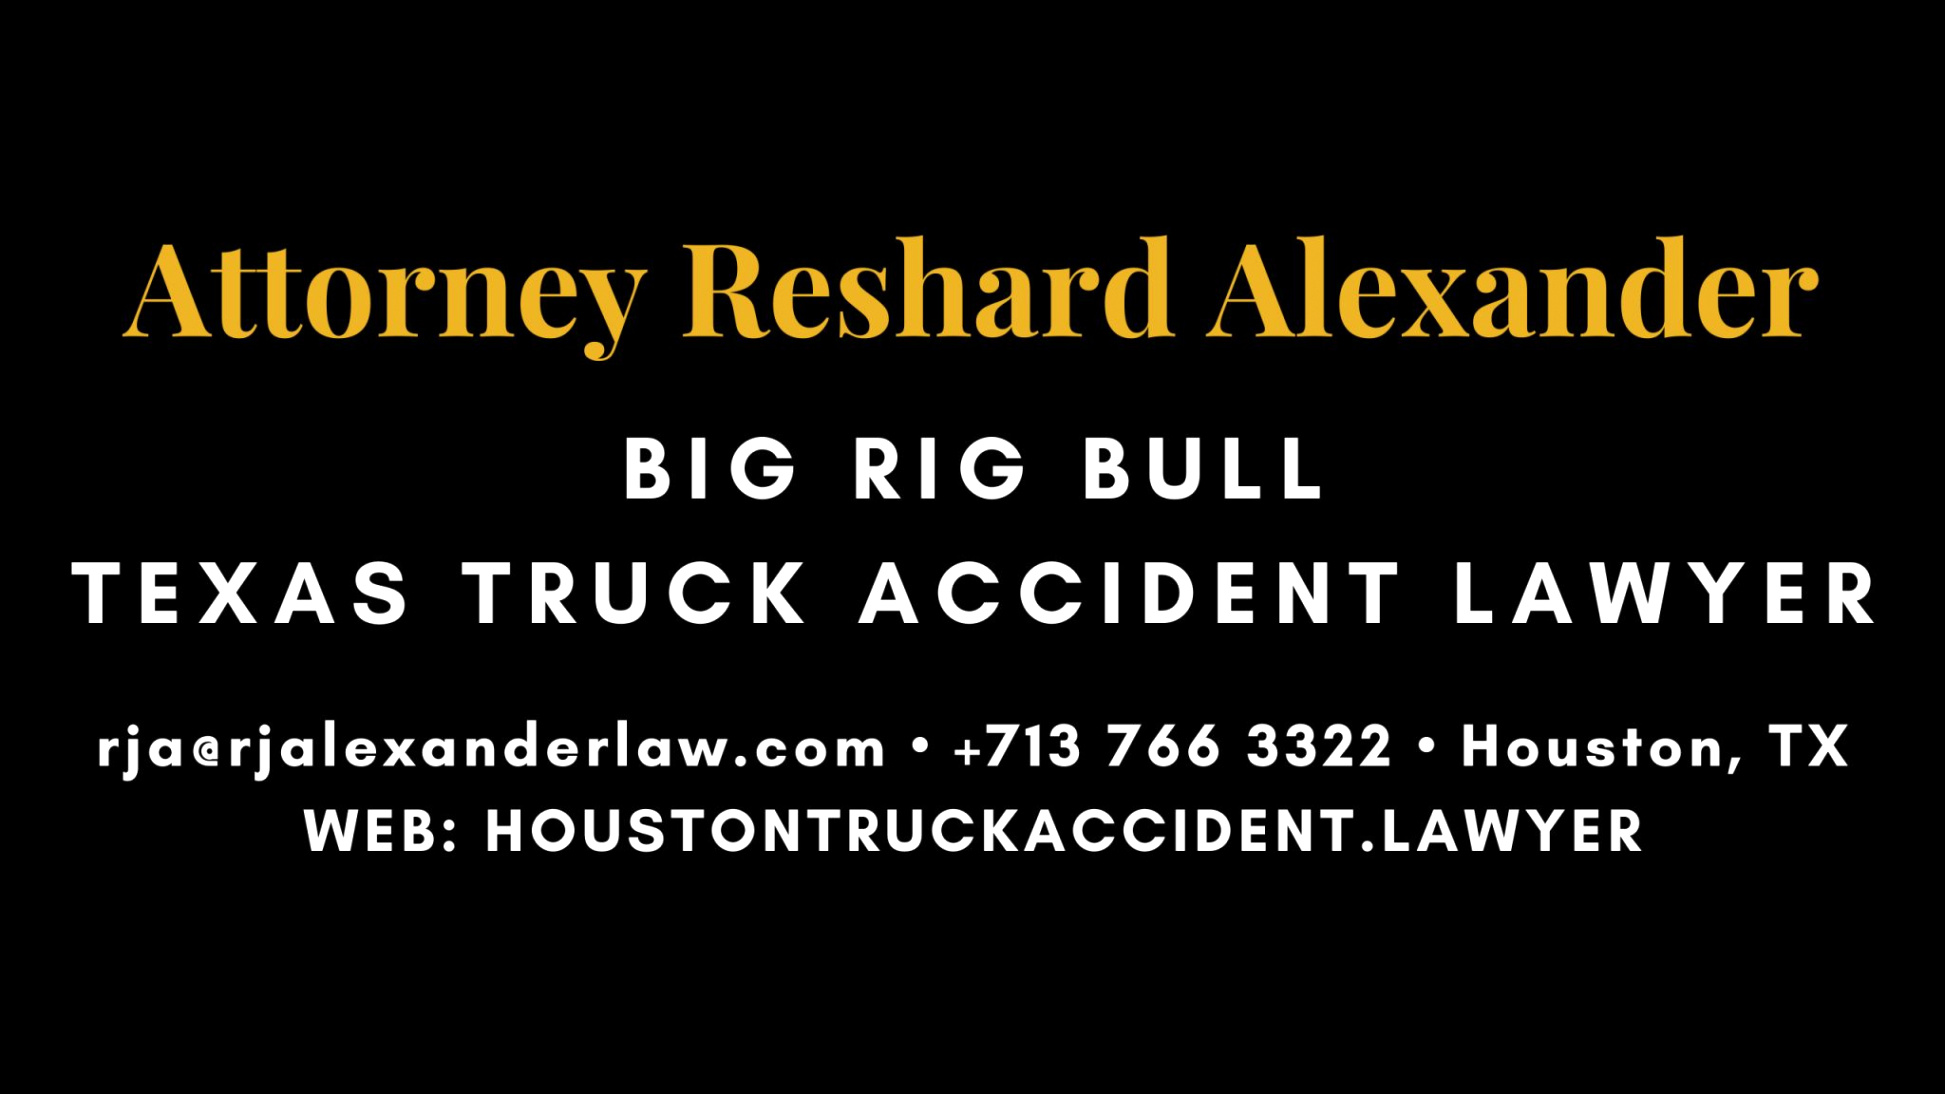 Personil Injury Lawyer In Morris Tx Dans Grain Hauler Houston Truck Accident Lawyer